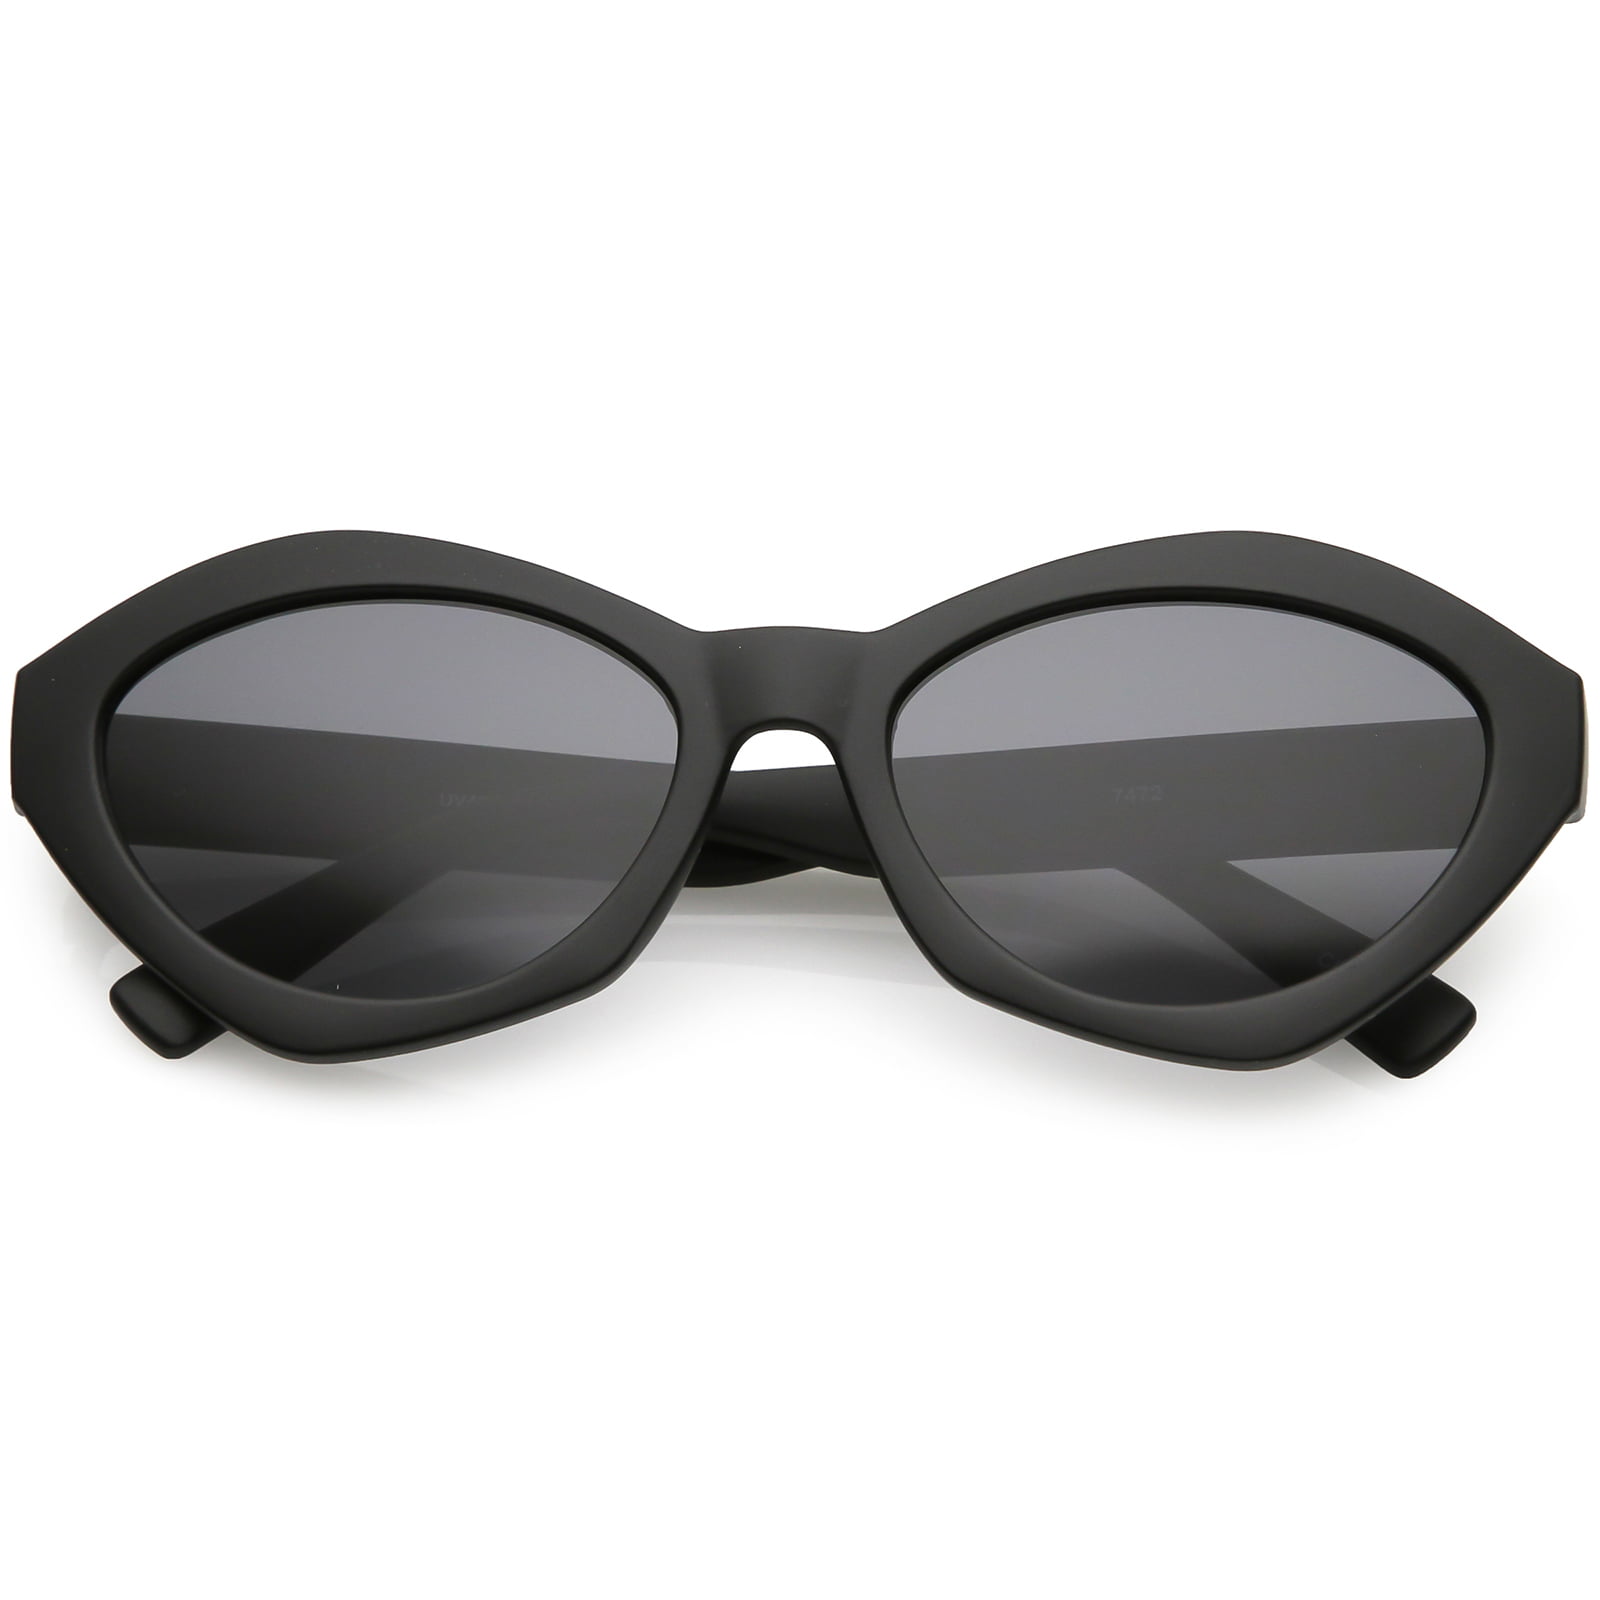 Modern Chunky Neutral Colored Cat Eye Sunglasses Oval Flat Lens 56mm ...